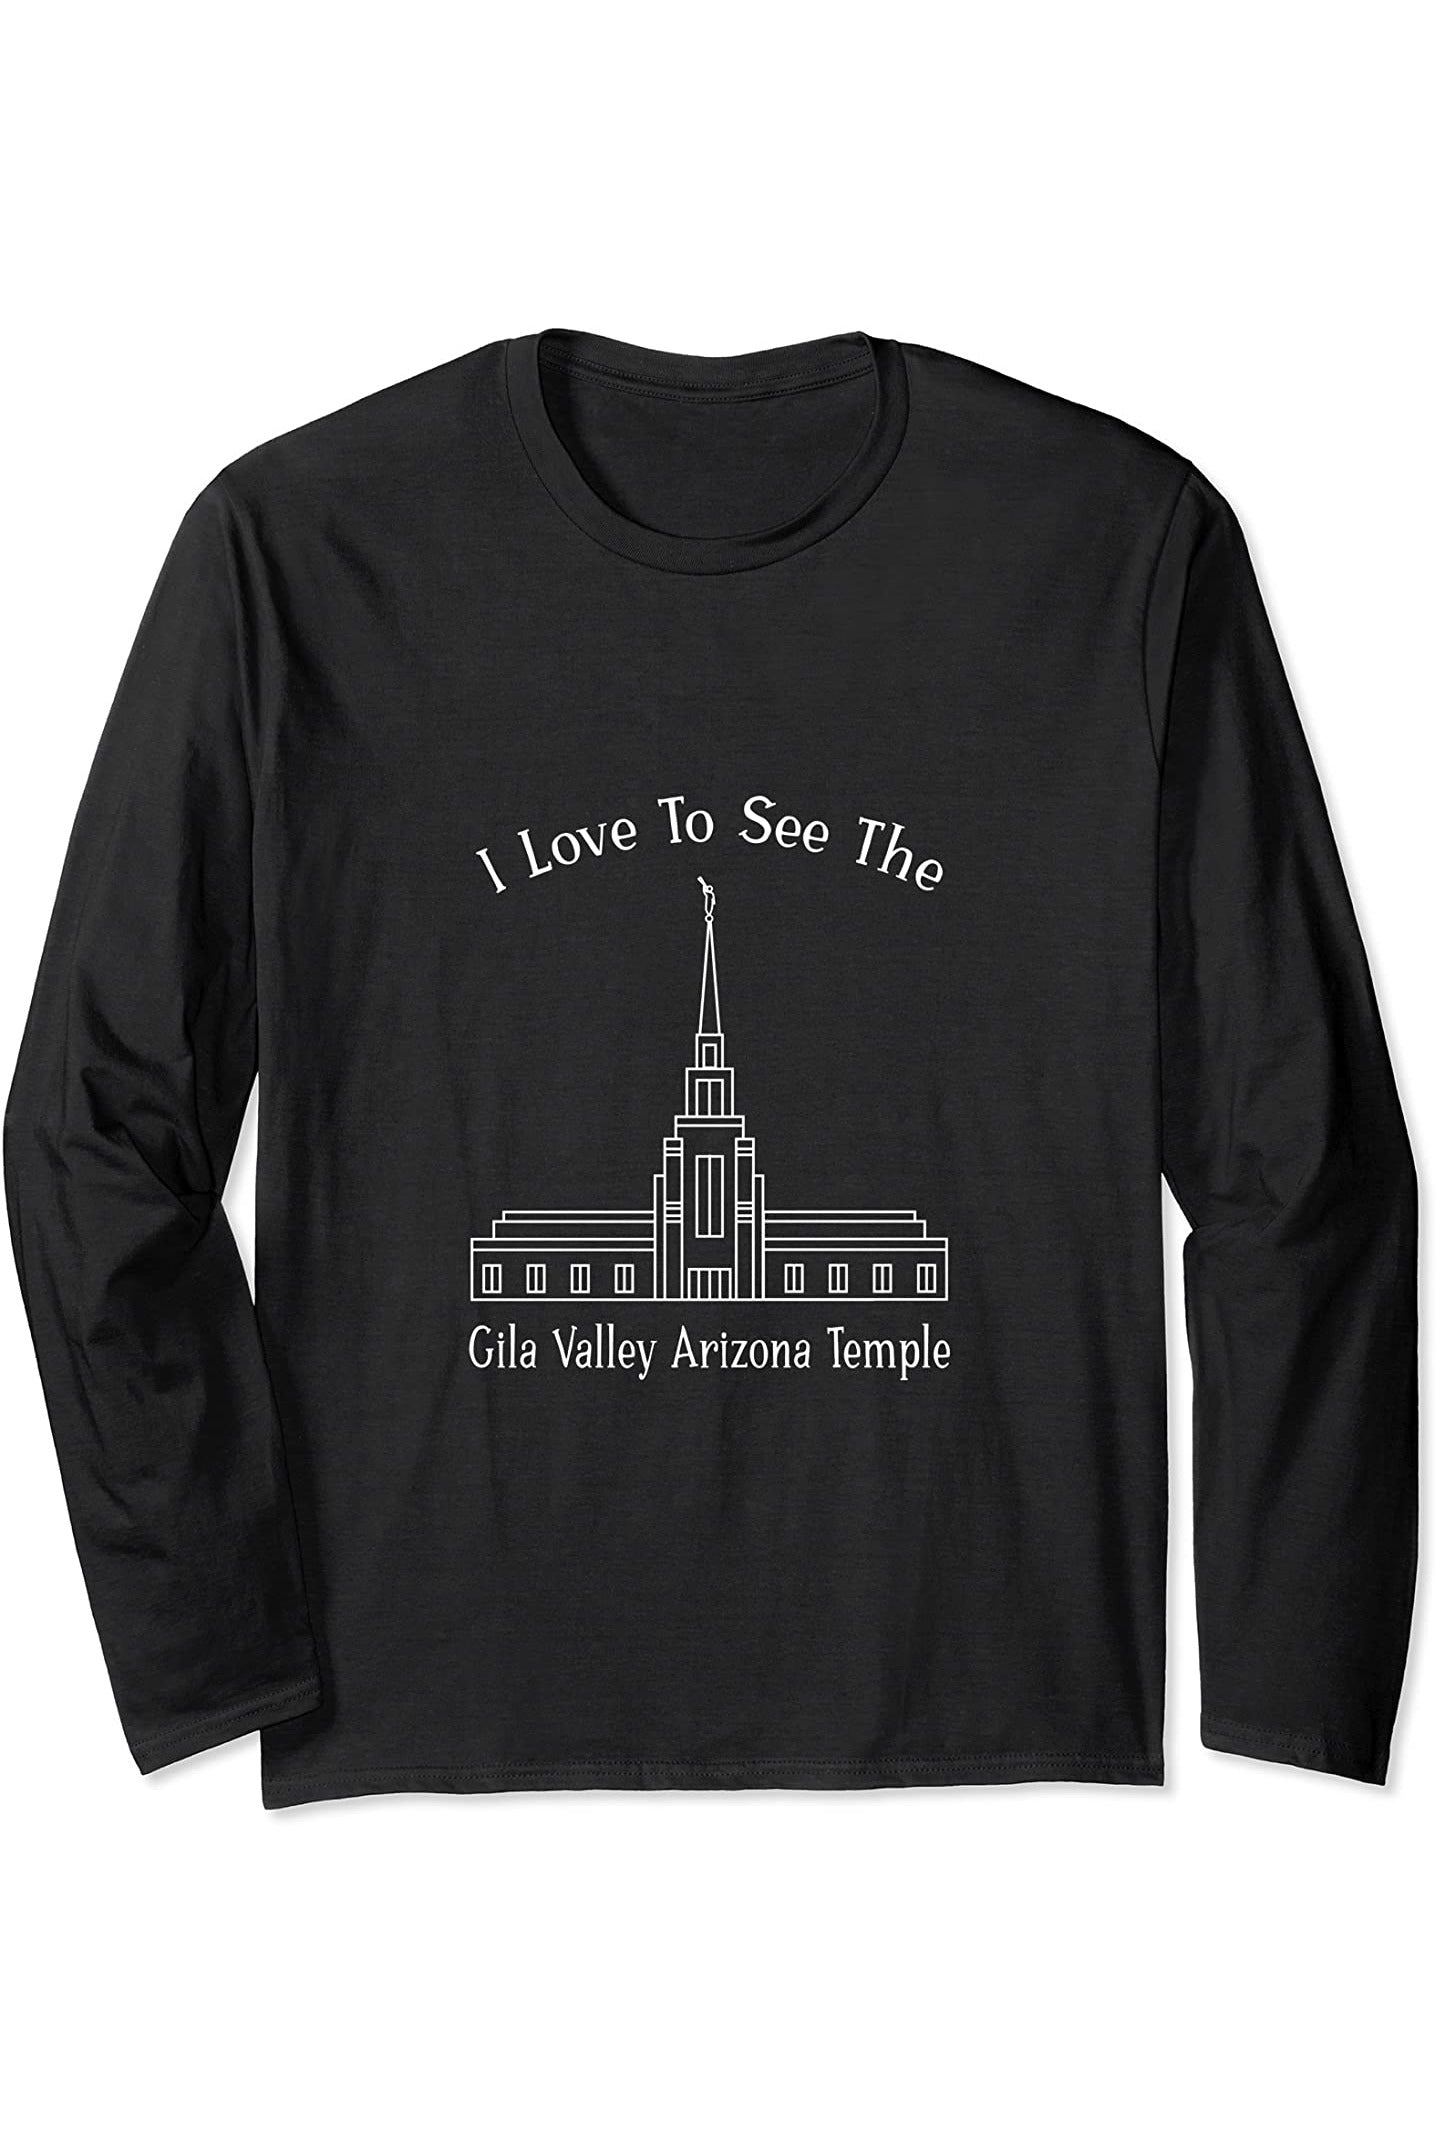 Gila Valley Arizona Temple Long Sleeve T-Shirt - Happy Style (English) US